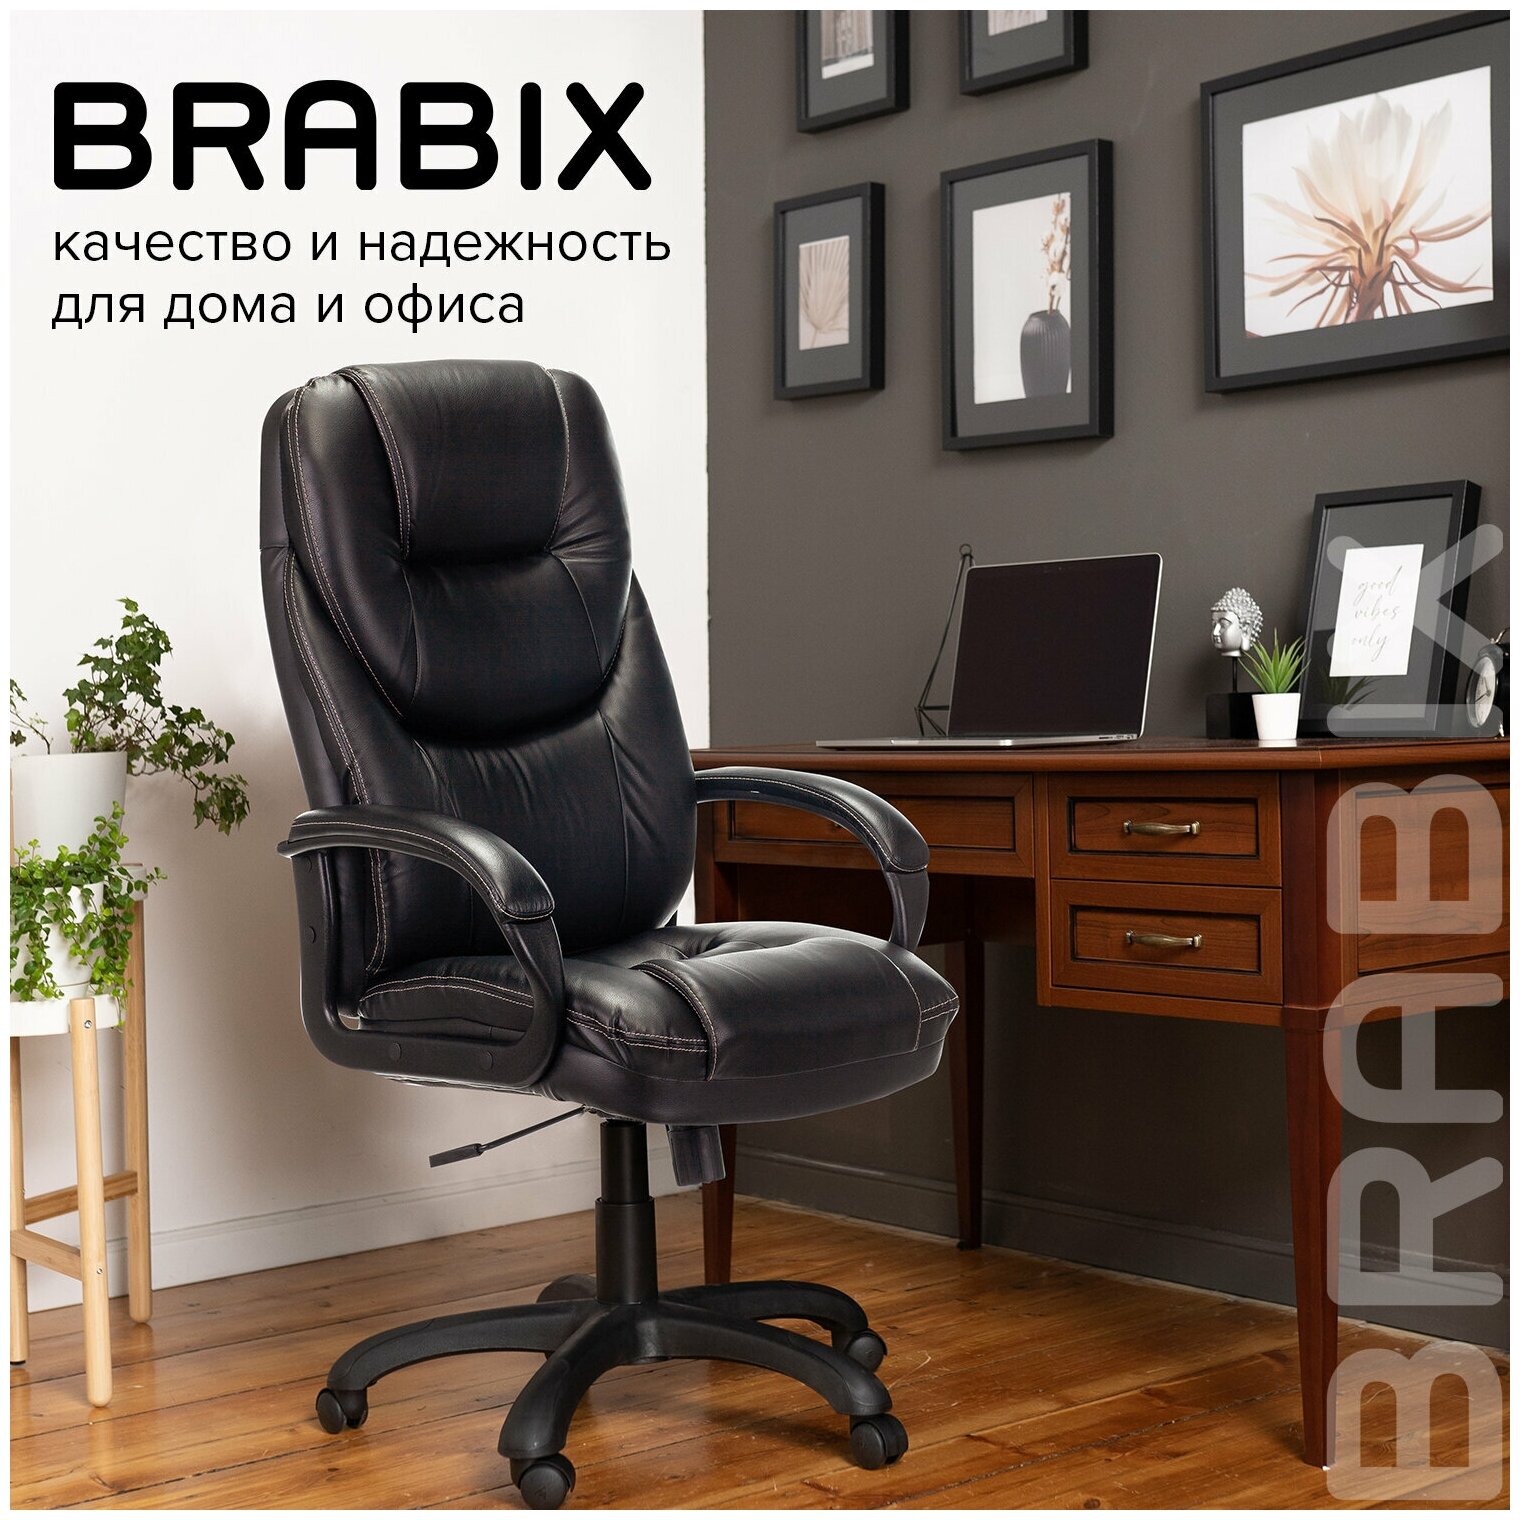 Кресло Brabix - фото №6